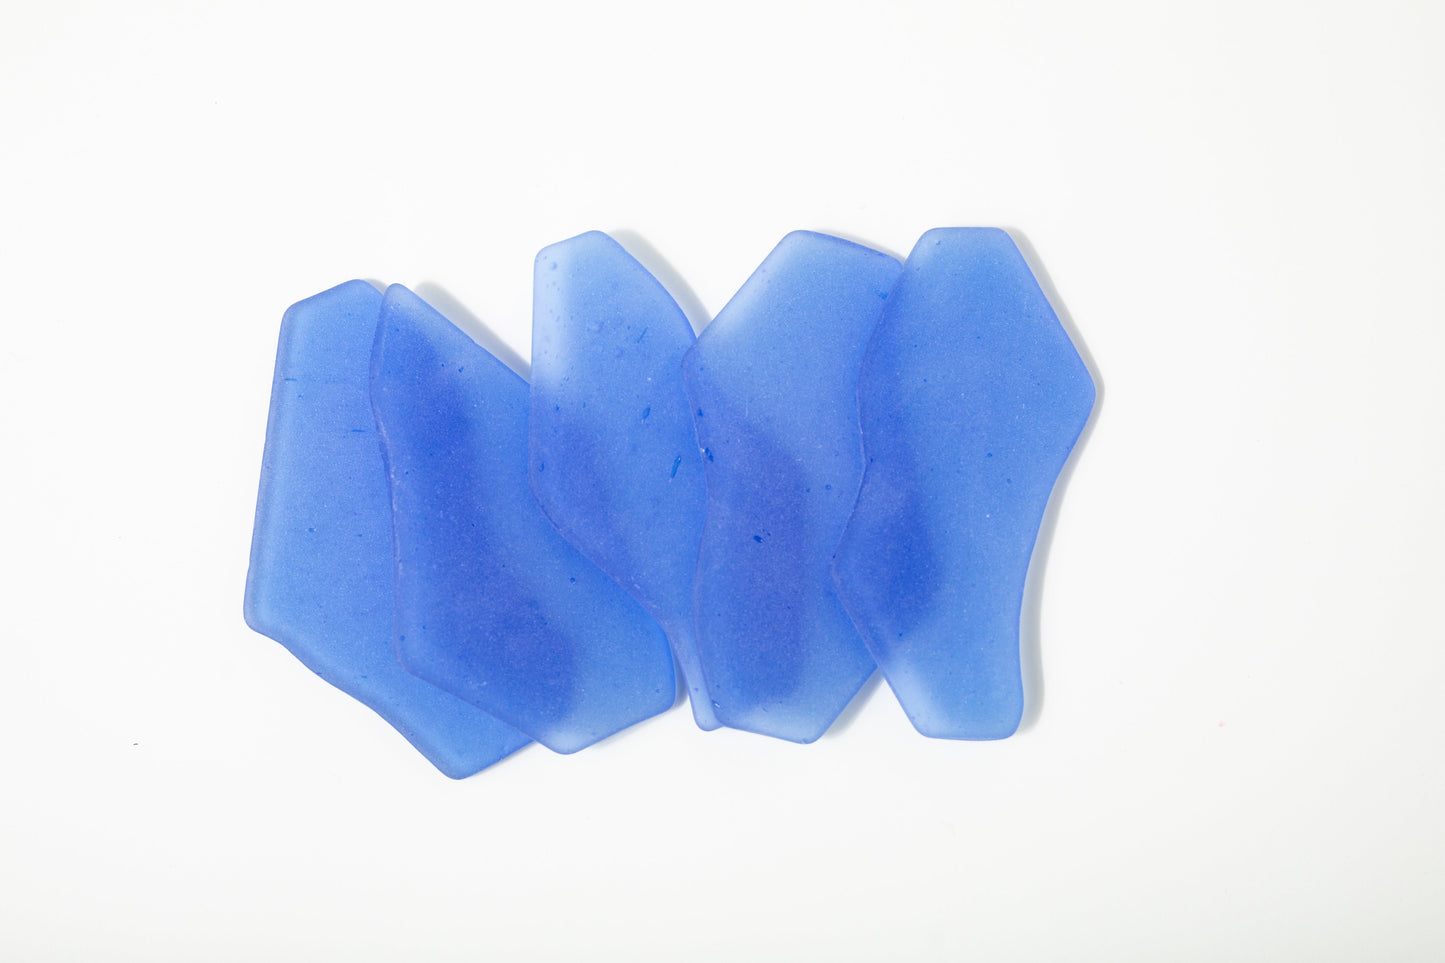 Cornflower Blue Sea Glass Place Cards - Set of 20 - Irregular Shaped Pieces